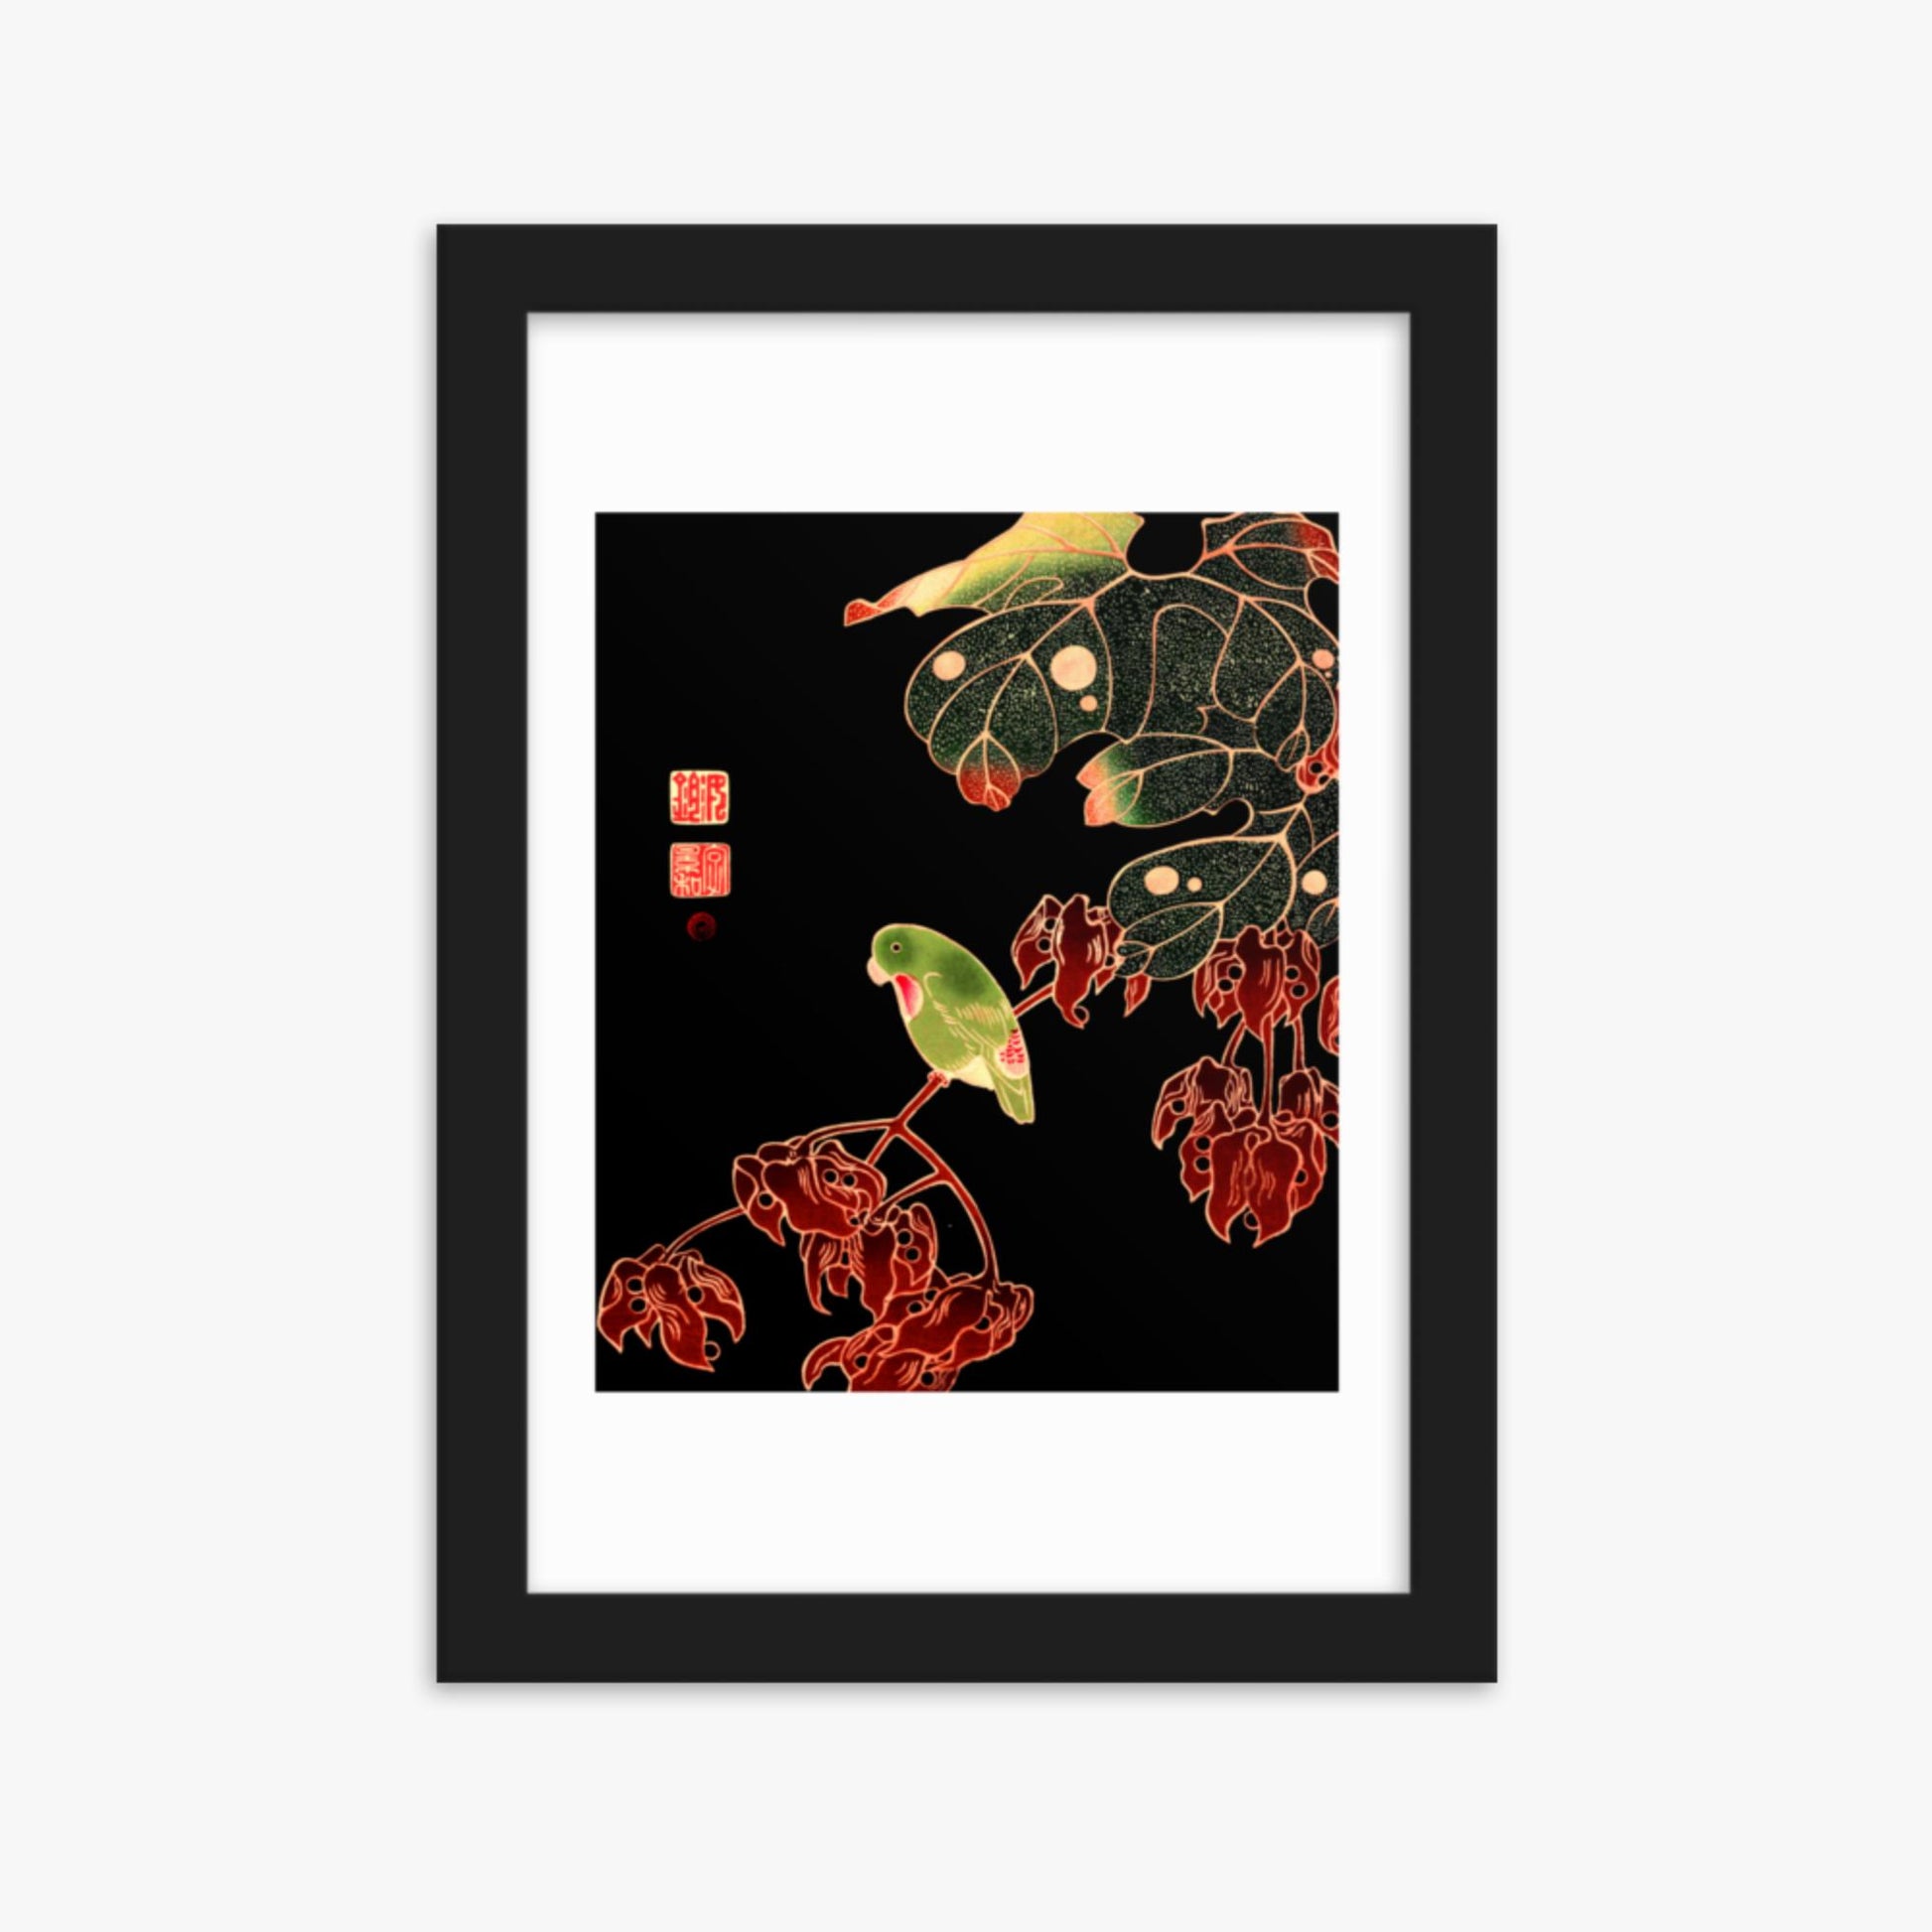 Ito Jakuchu - The Paroquet 21x30 cm Poster With Black Frame